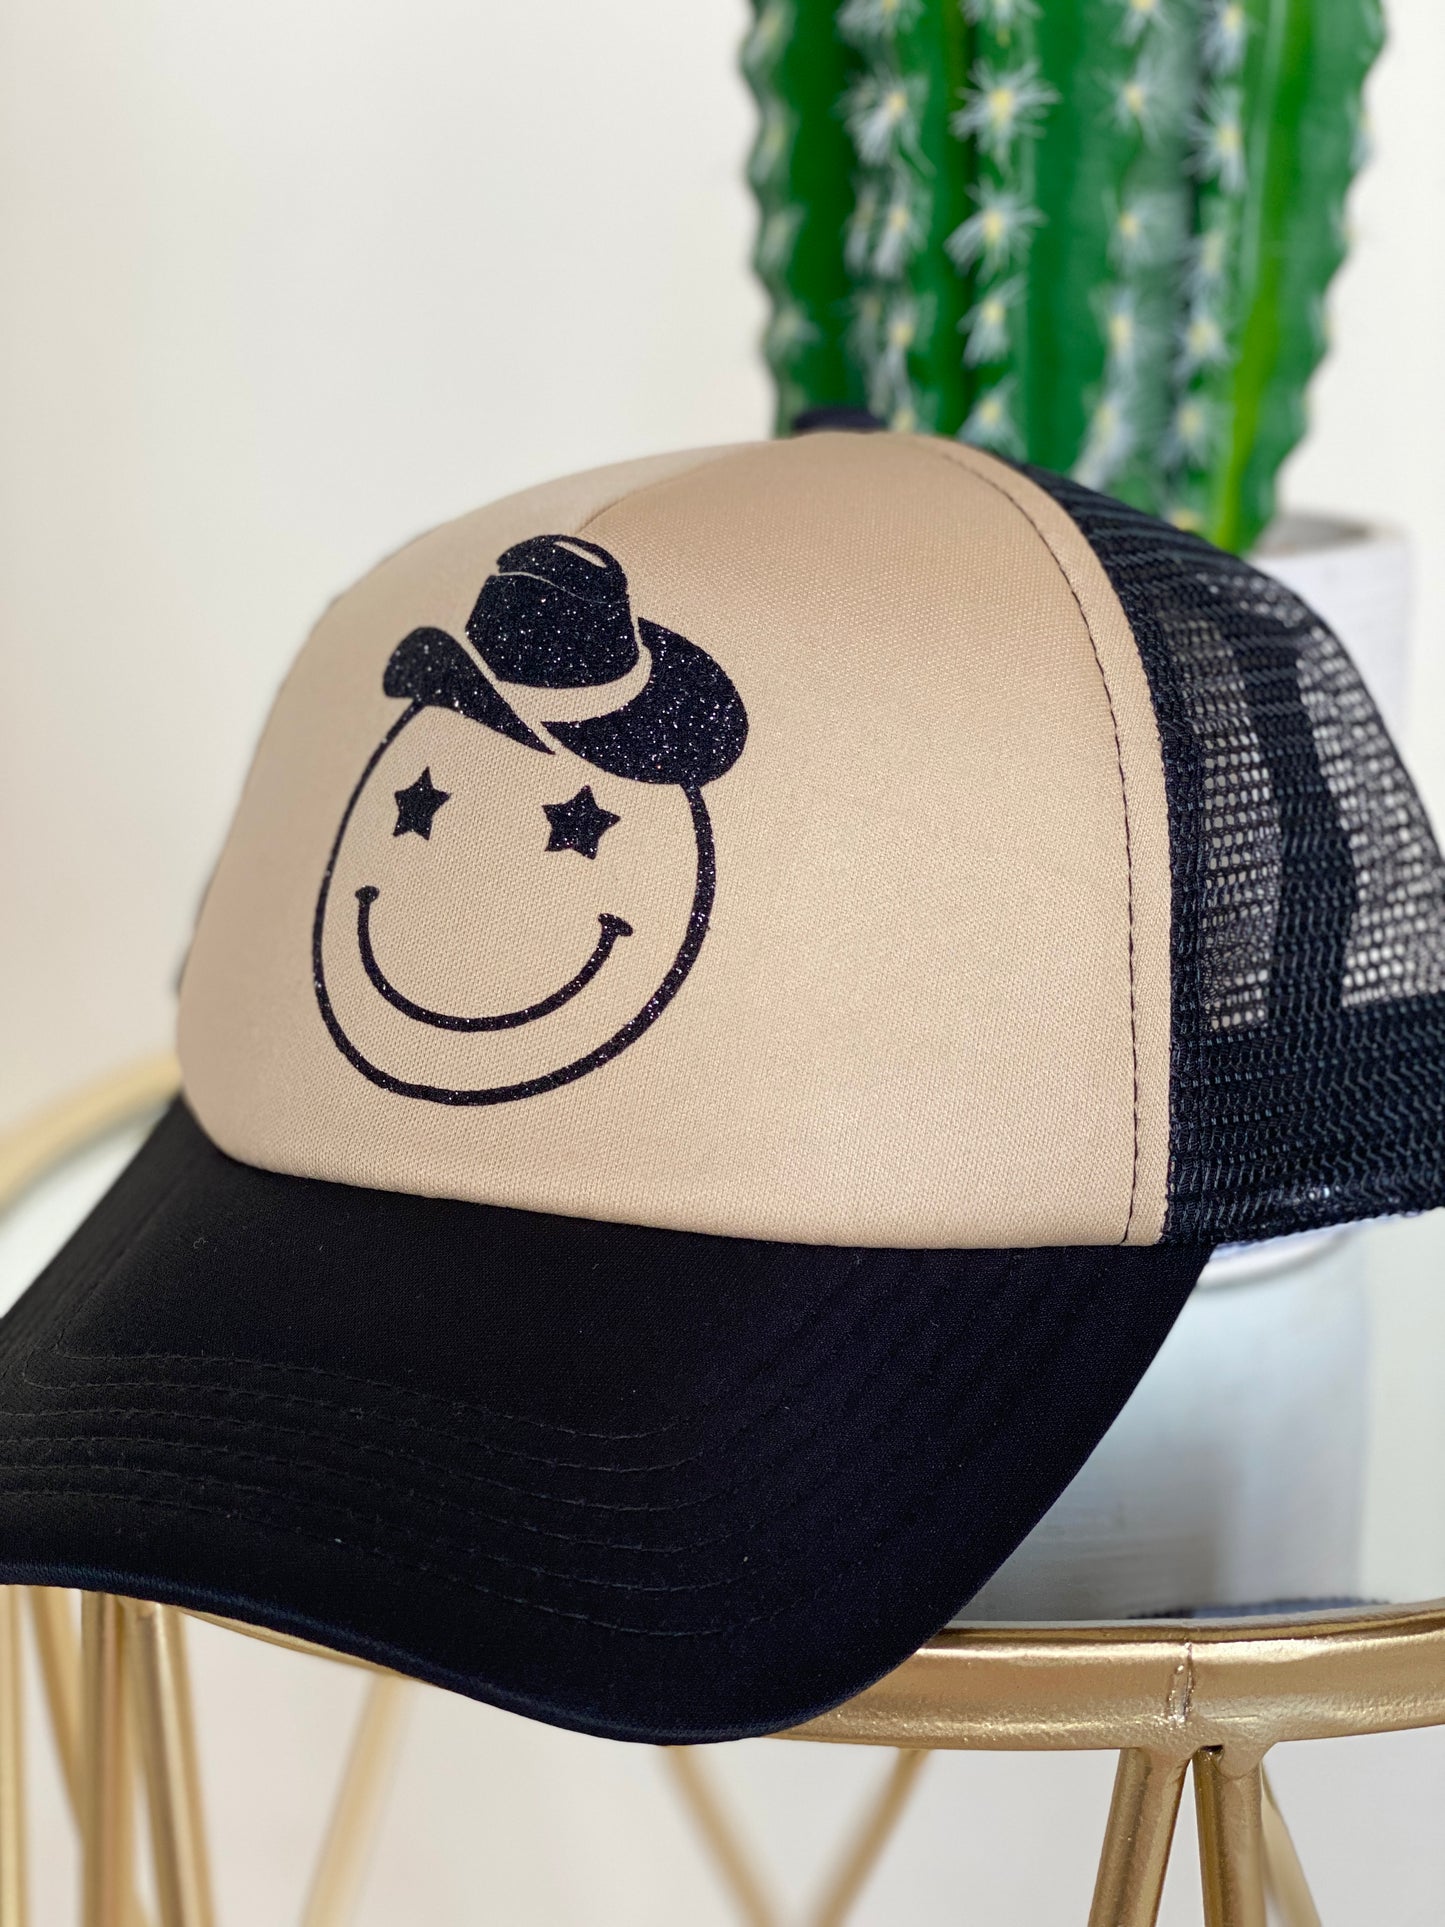 Howdy Smiley Glitter Trucker Hat - Black and Tan